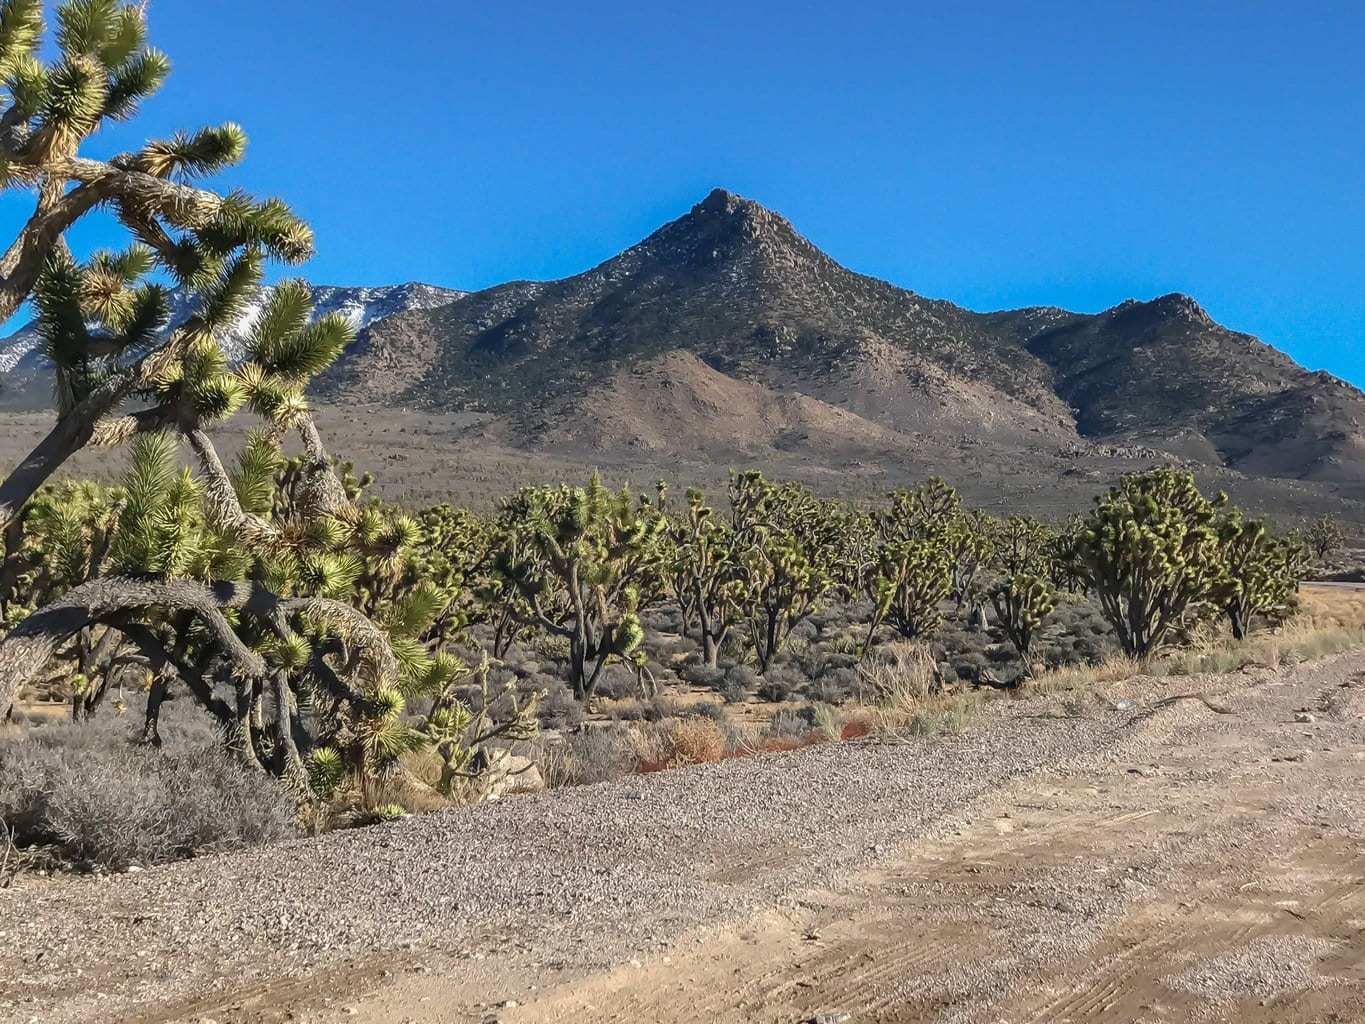 Joshua Trees in Arizona